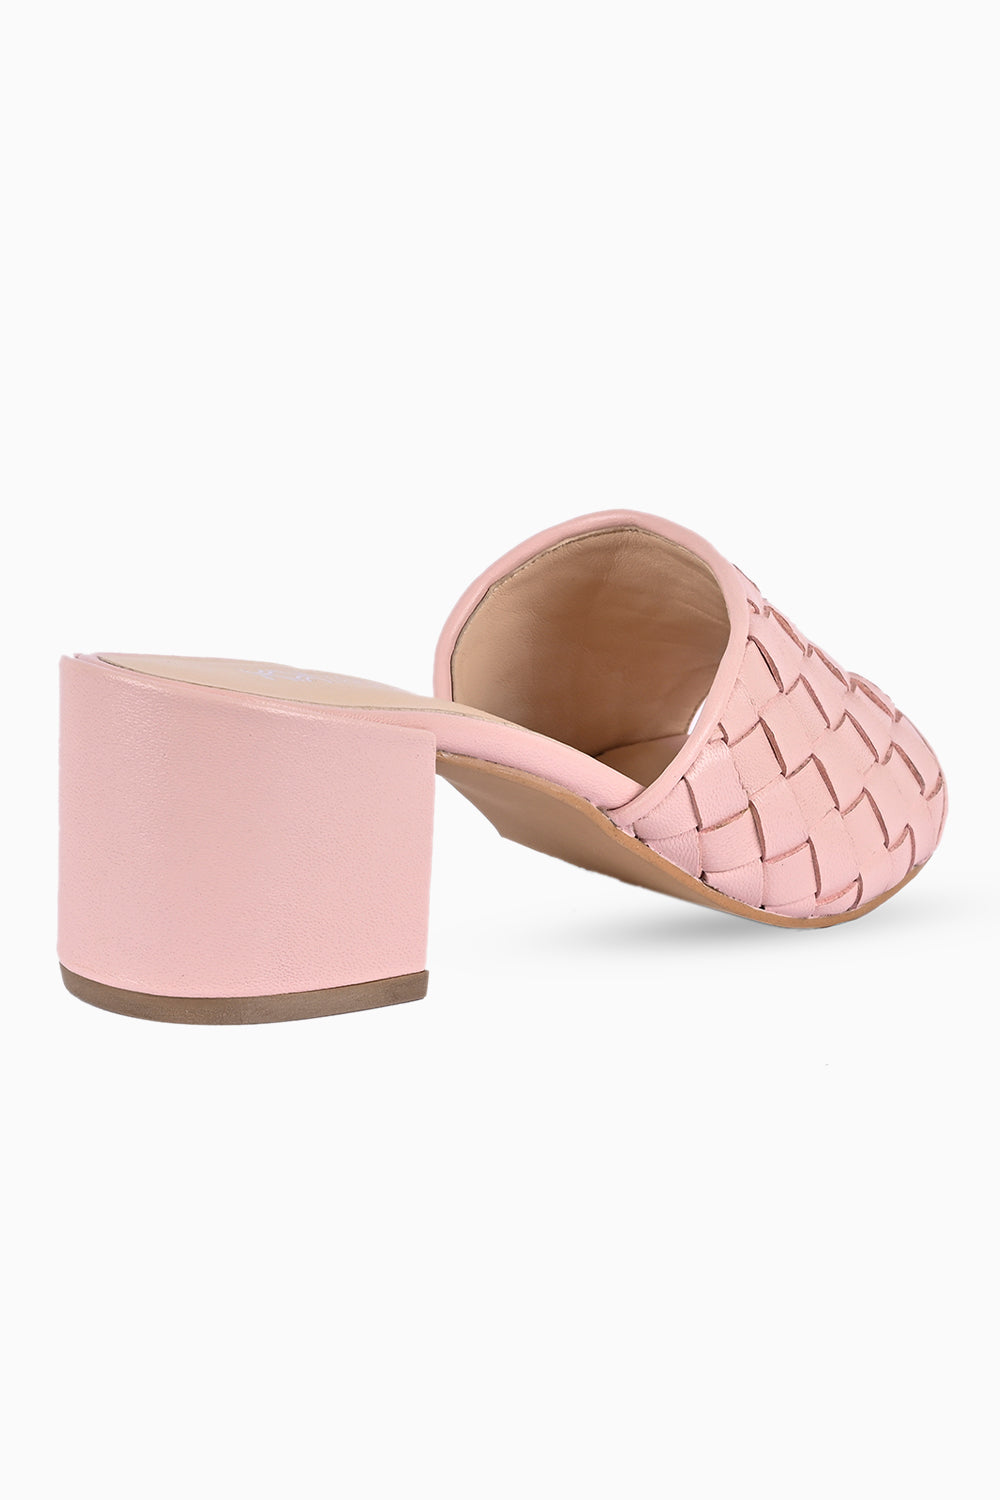 Natty Pink Leather Heels